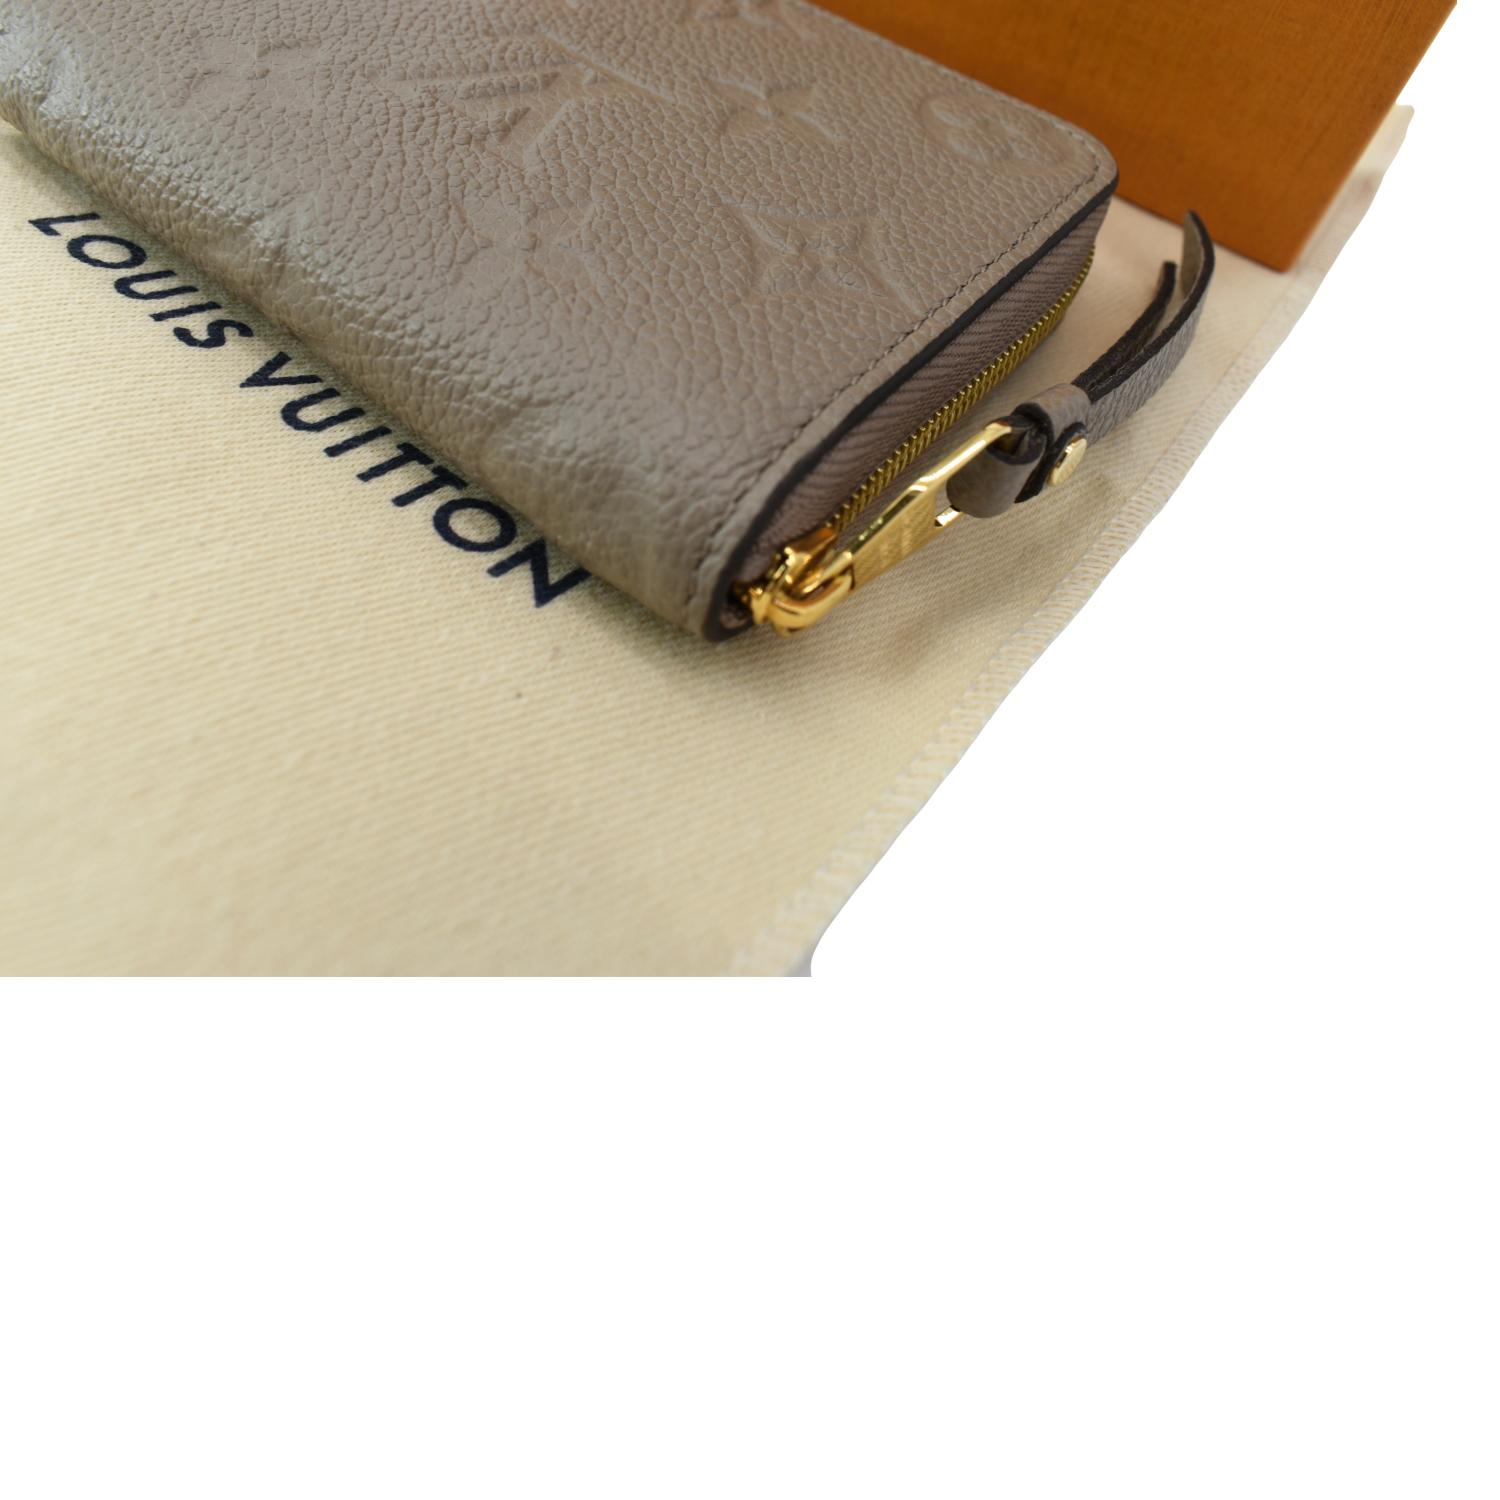 Louis Vuitton Zippy Wallet Turtledove Monogram Empreinte